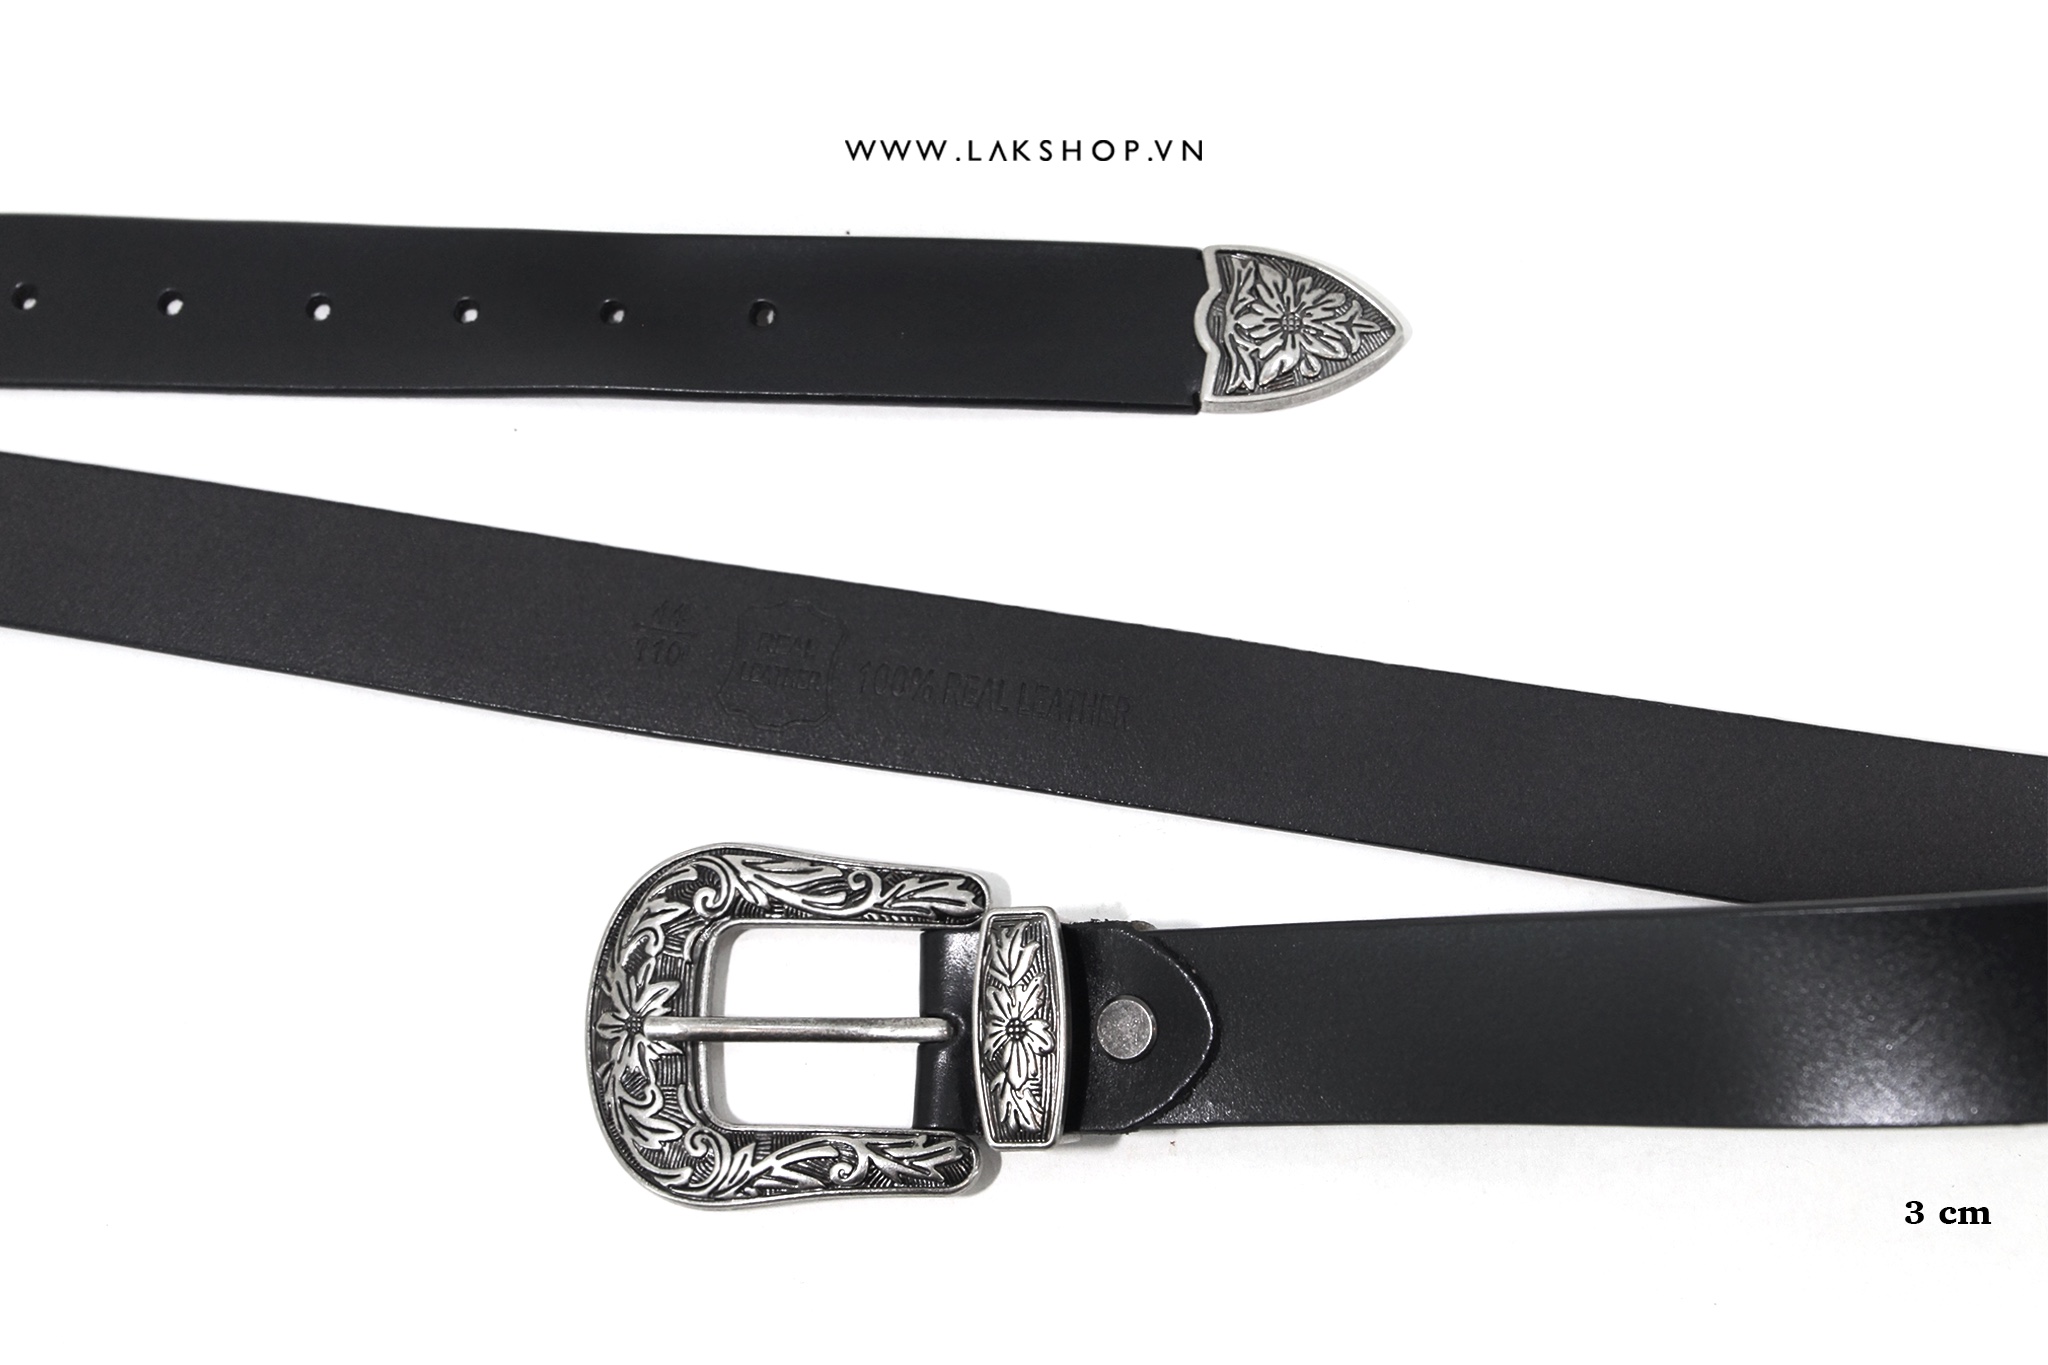 [HOT] Western-inspired Buckled Leather Belt (3cm)